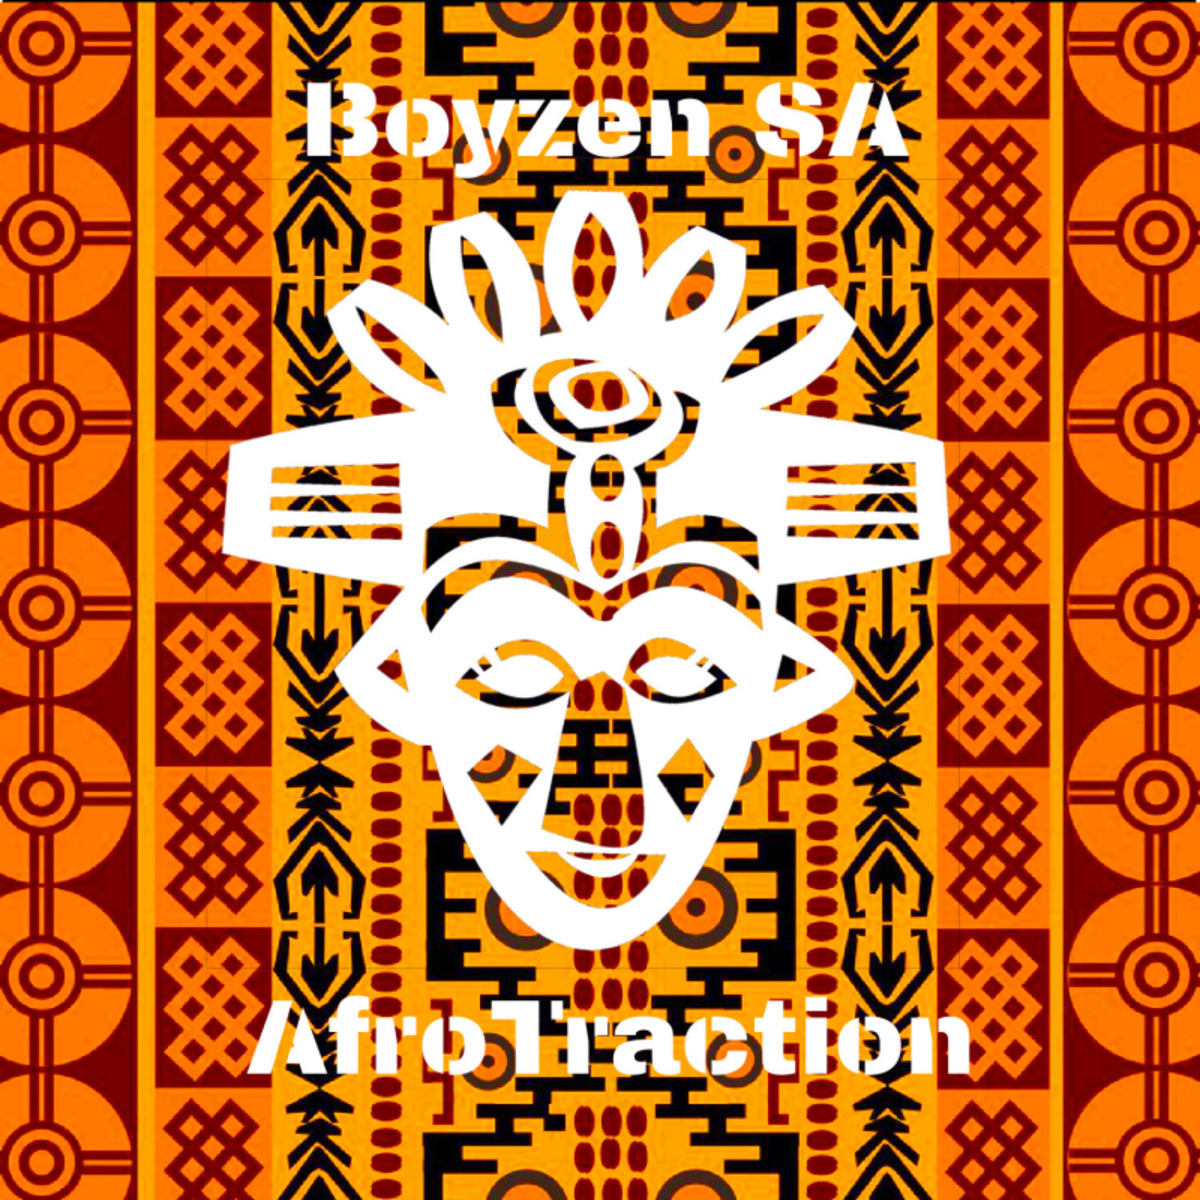 Boyzen SA - AfroTraction / 3Sugarz Record Label pty ltd